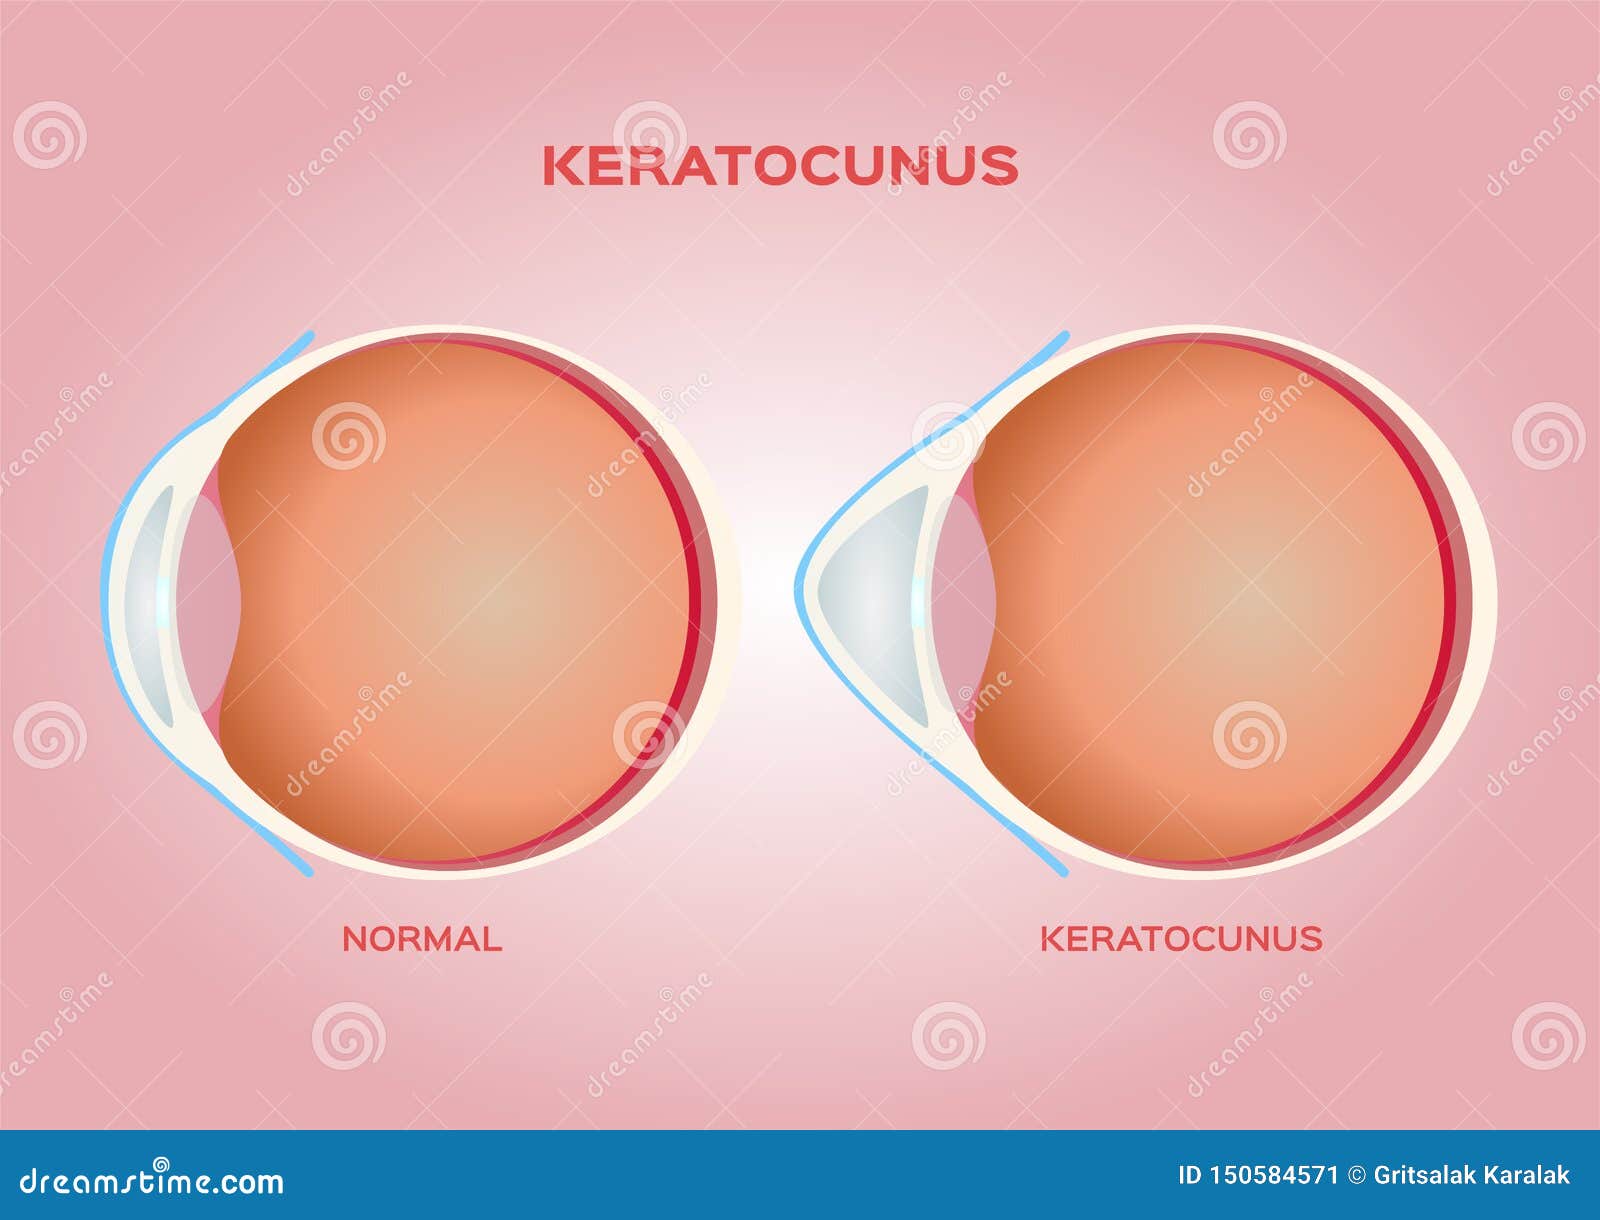 eye cornea and keratoconus  / anatomy